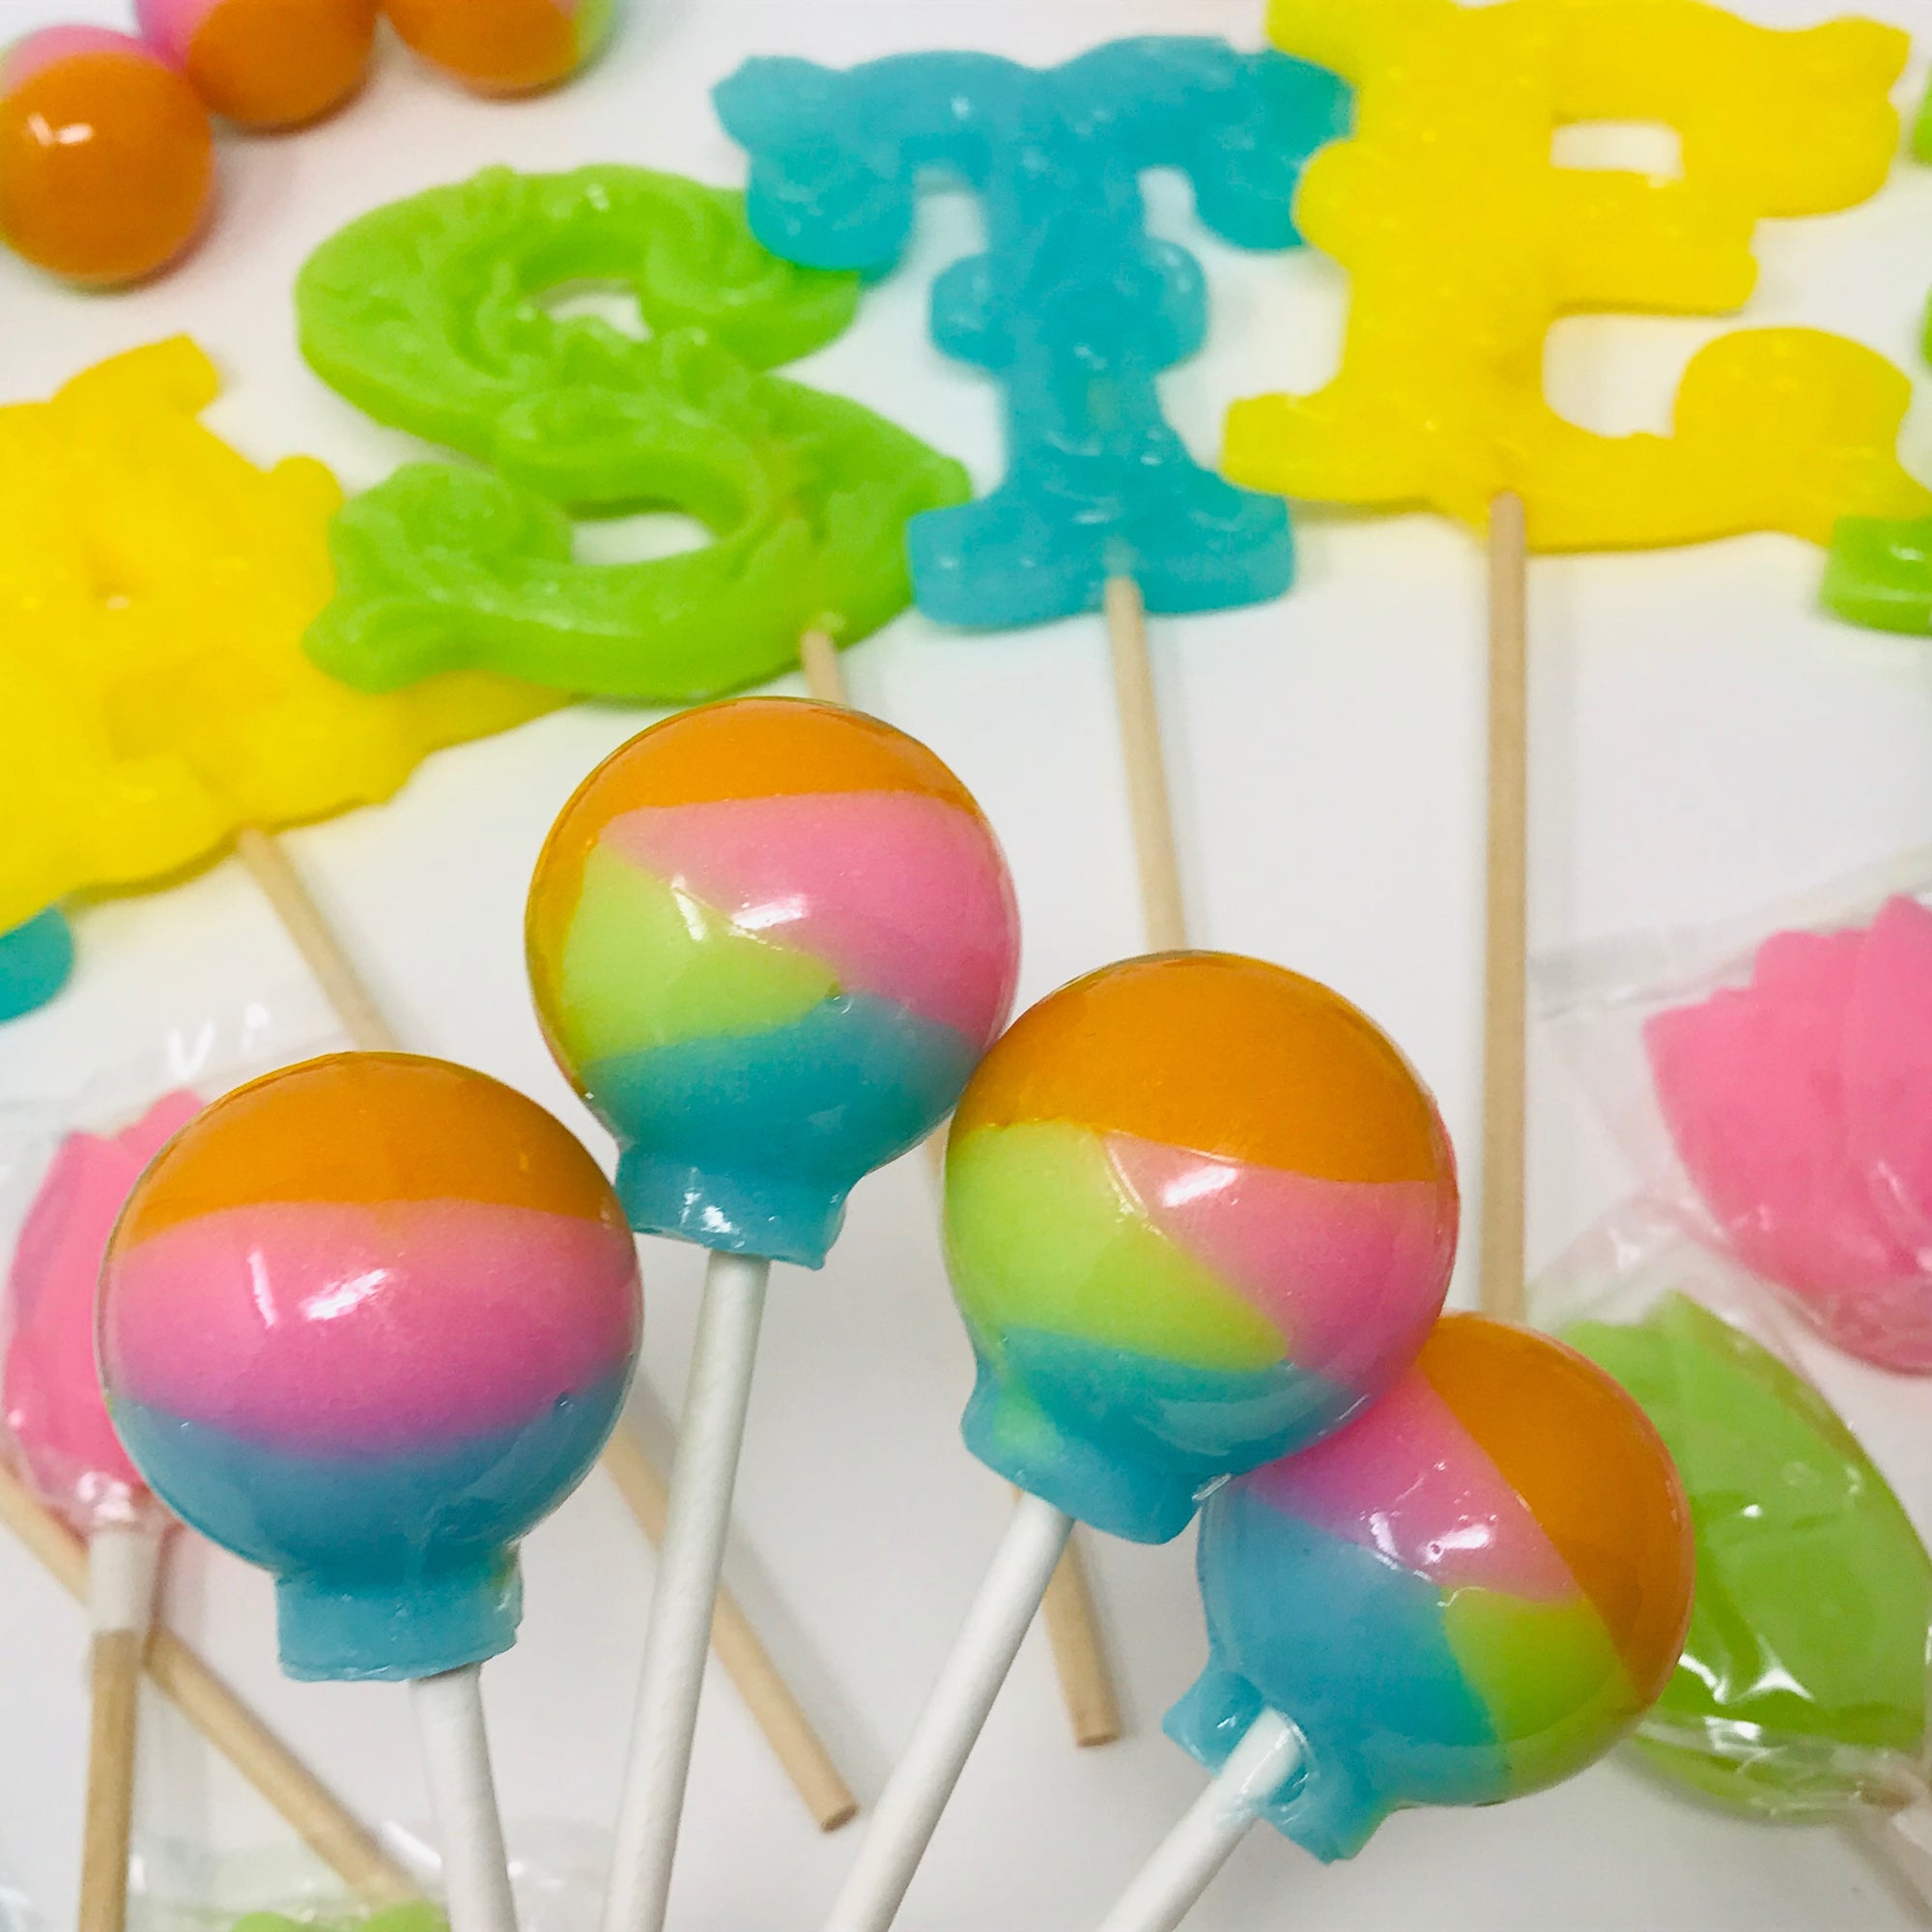 Rainbow Sherbet Lollipops 6-piece set by I Want Candy